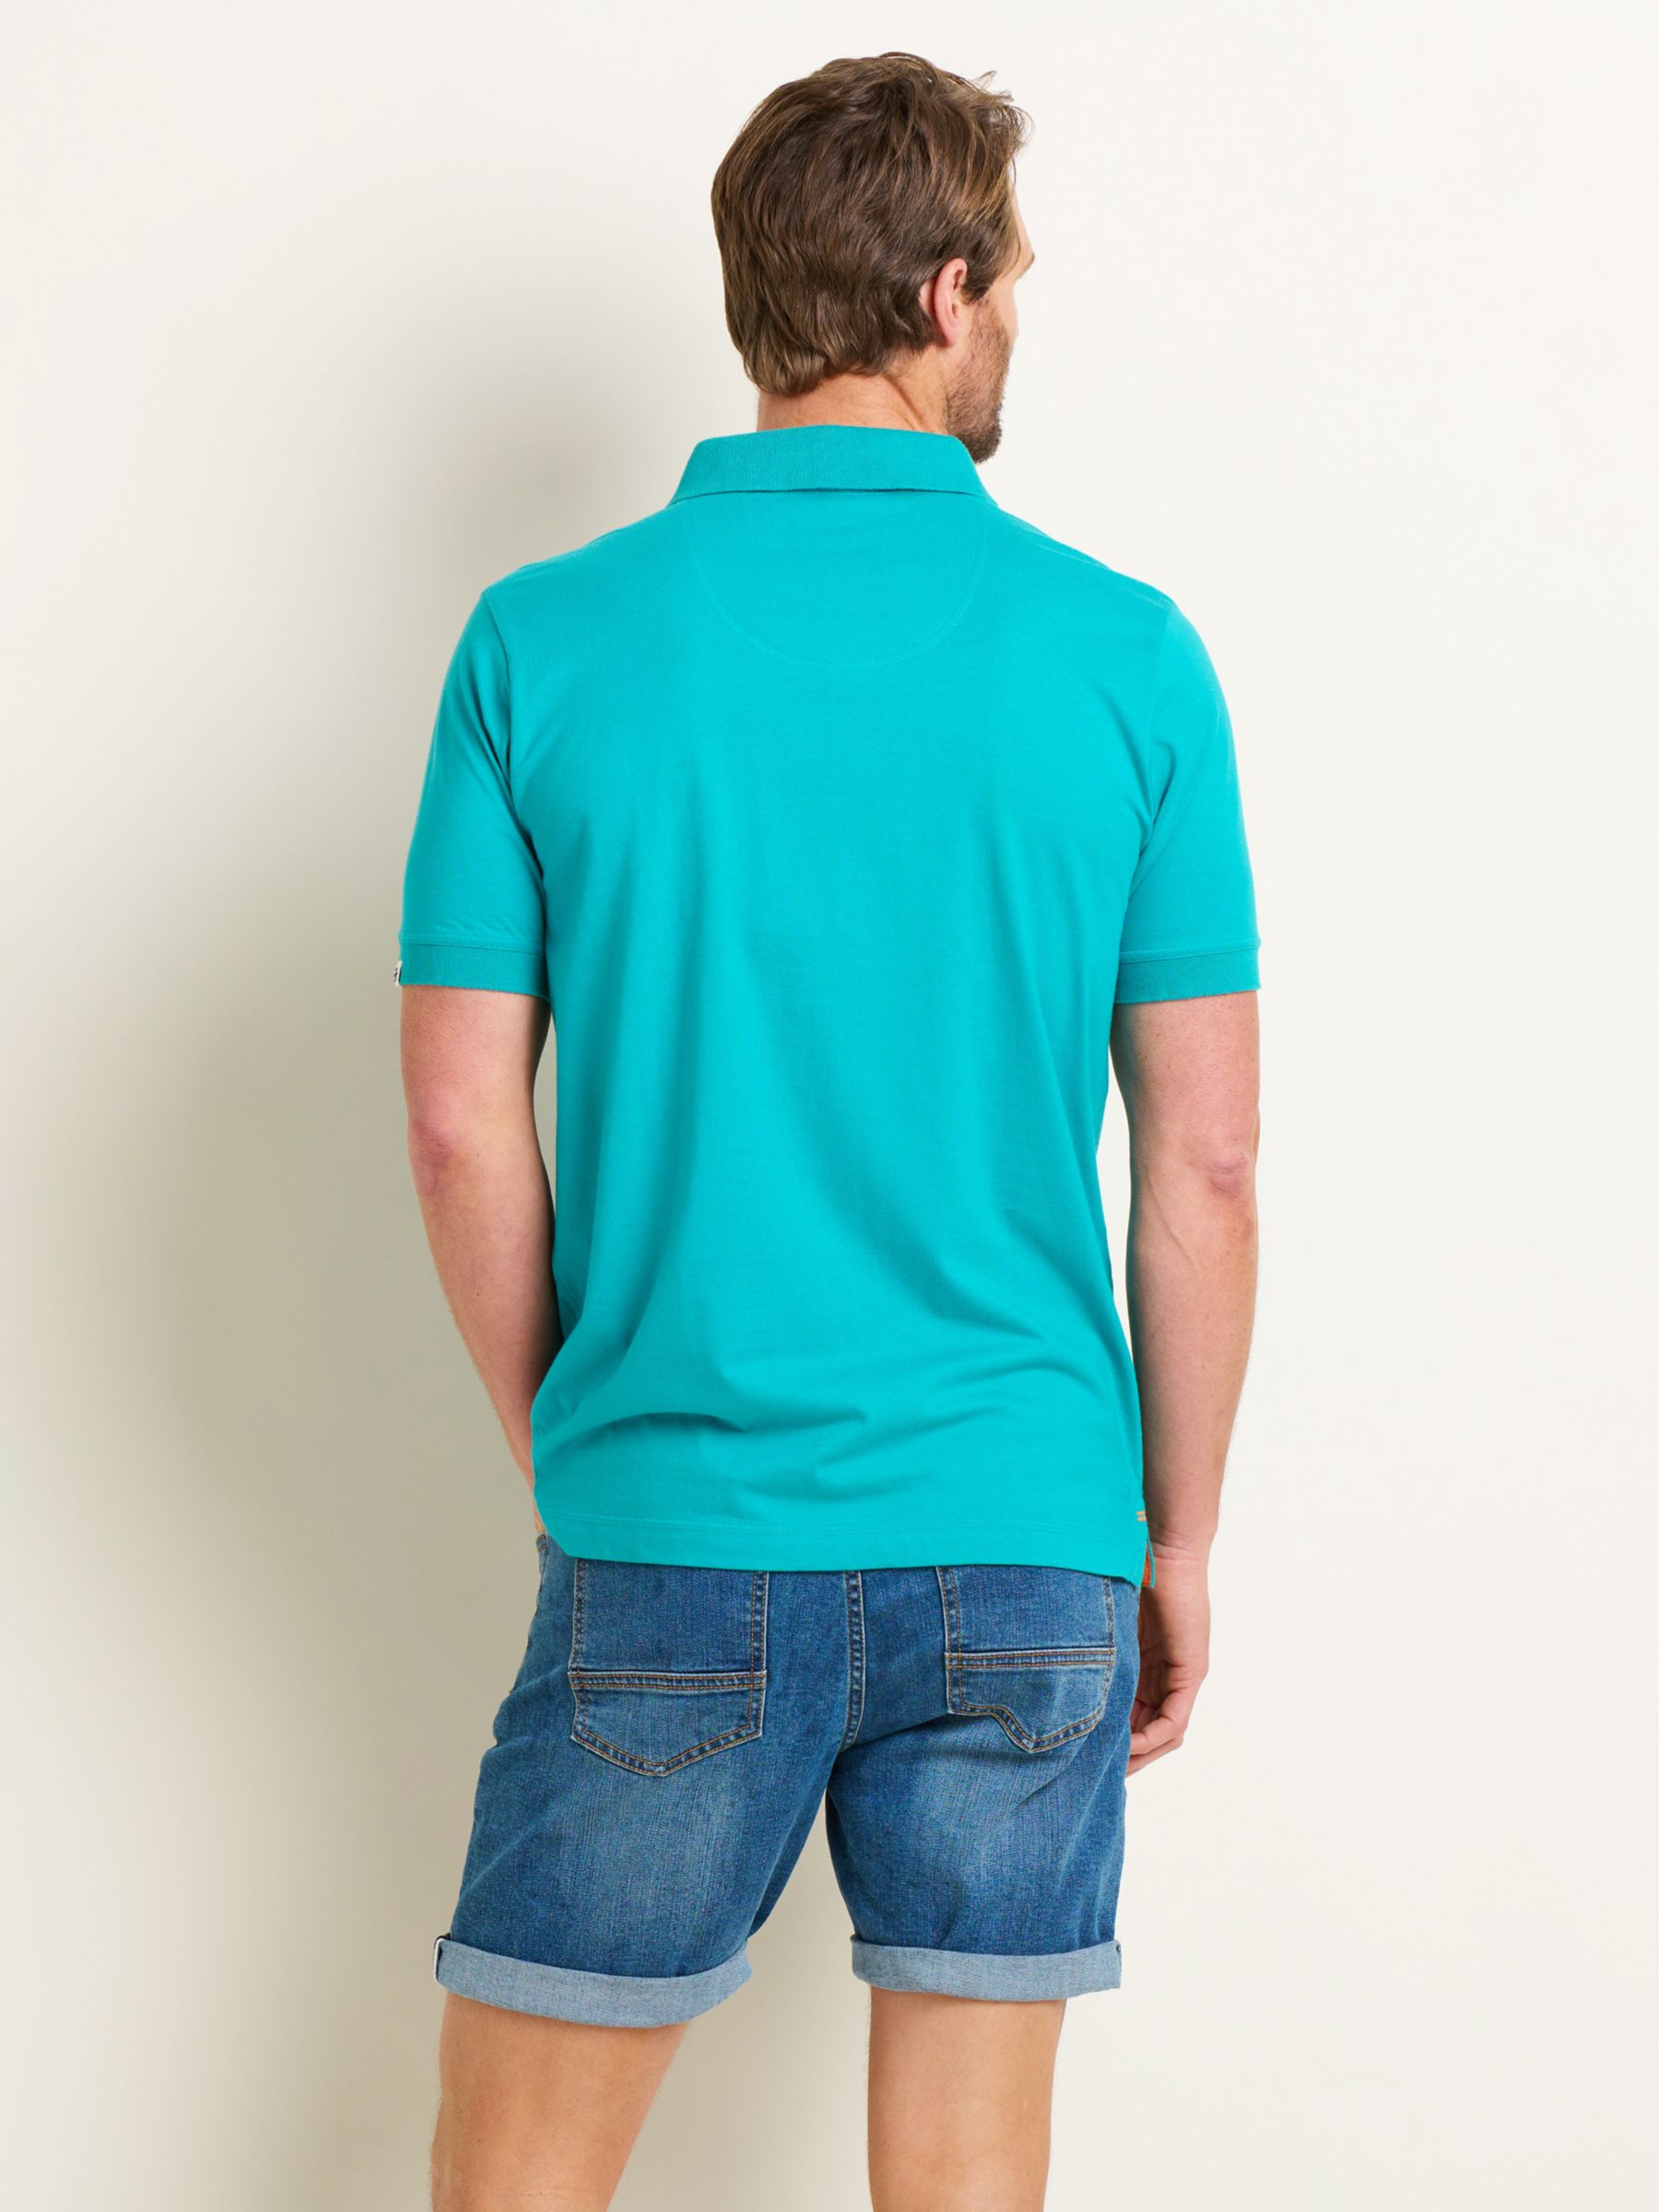 Brakeburn Heritage Polo Shirt, Turquoise, L